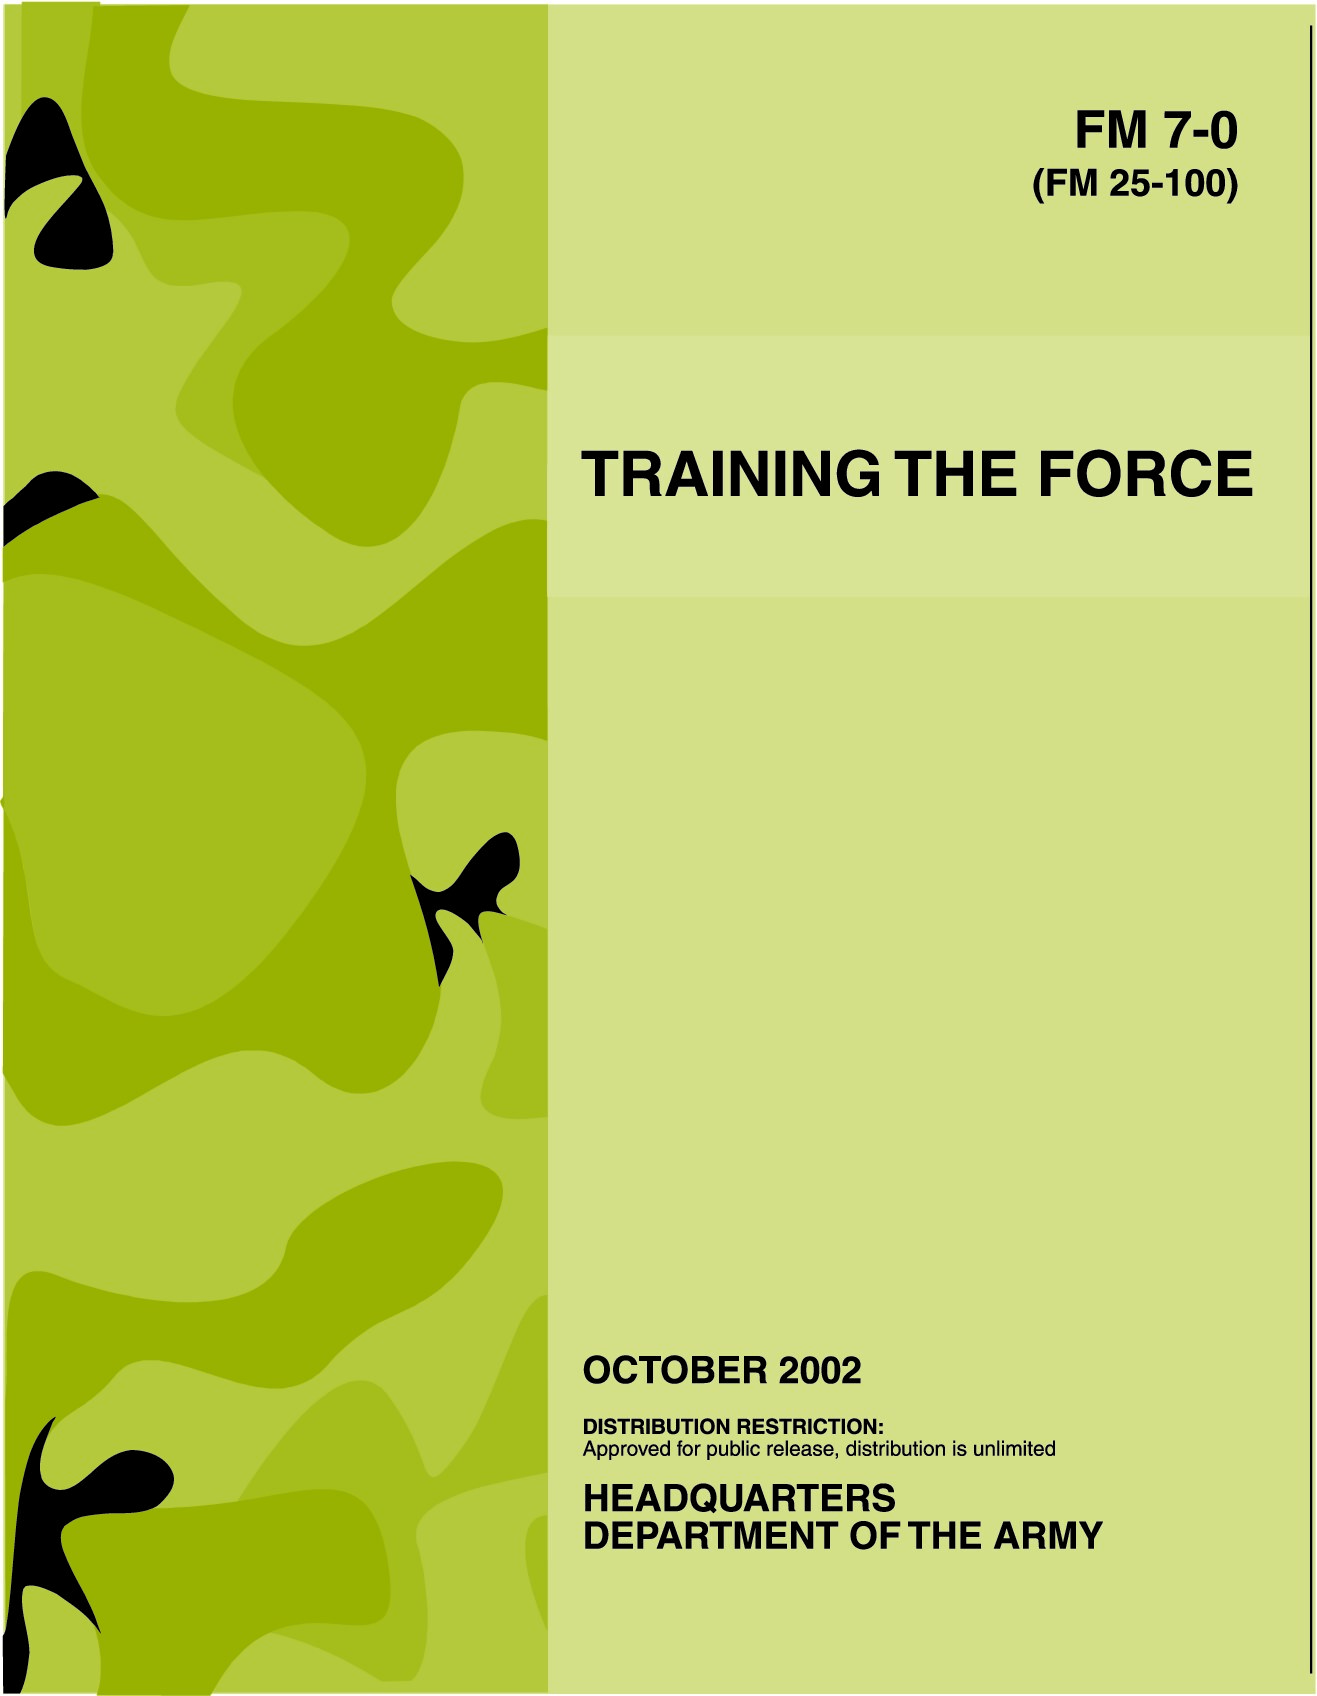 FM 7-0 Training the Force